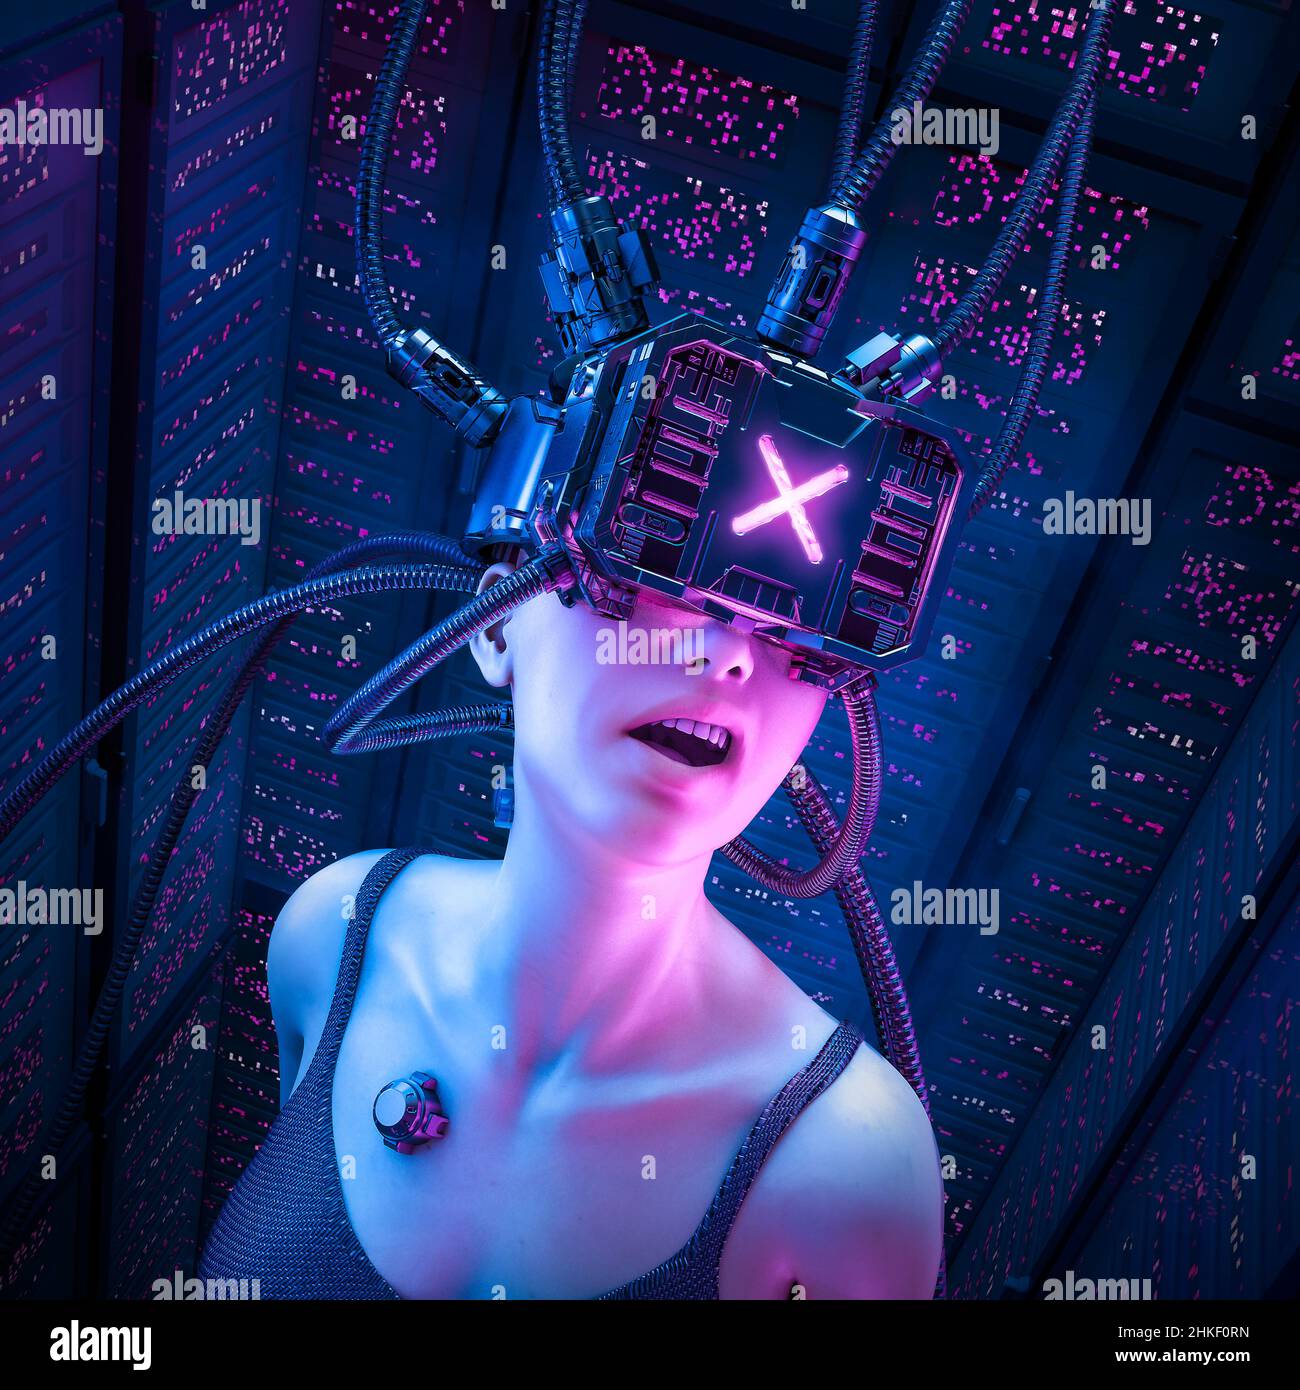 Cyberpunk hacker girl - 3D illustration of science fiction shocked female character wearing futuristic virtual reality glasses inside server farm Stock Photo